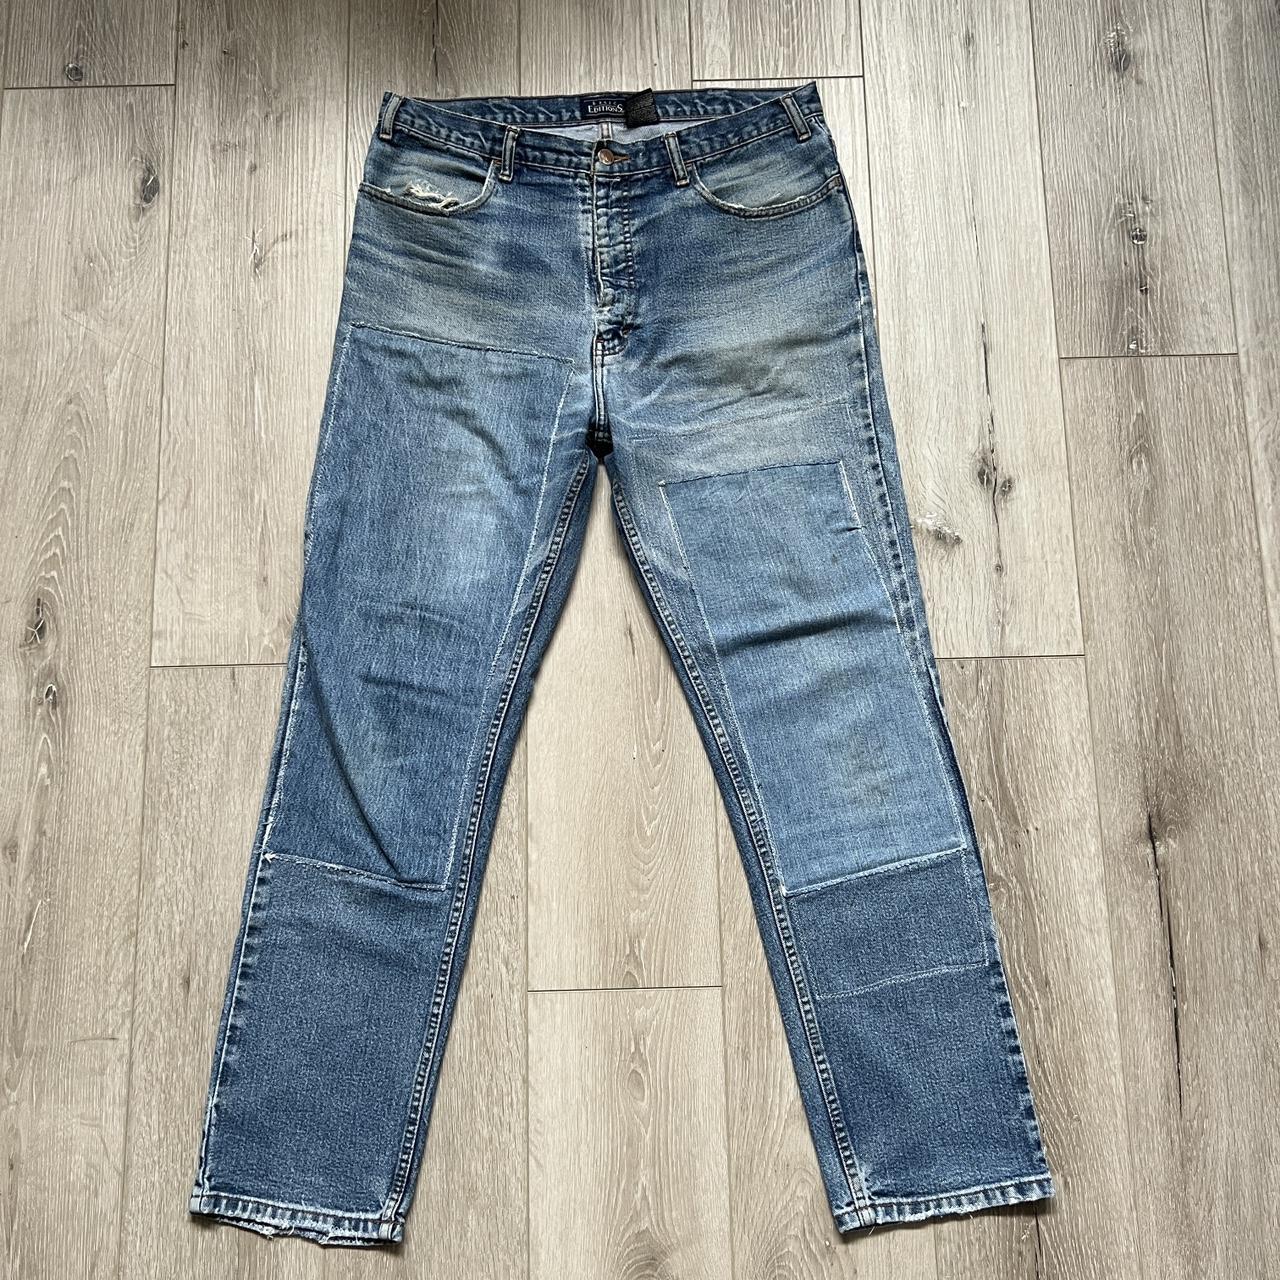 Basic Editions Men's Blue Jeans | Depop